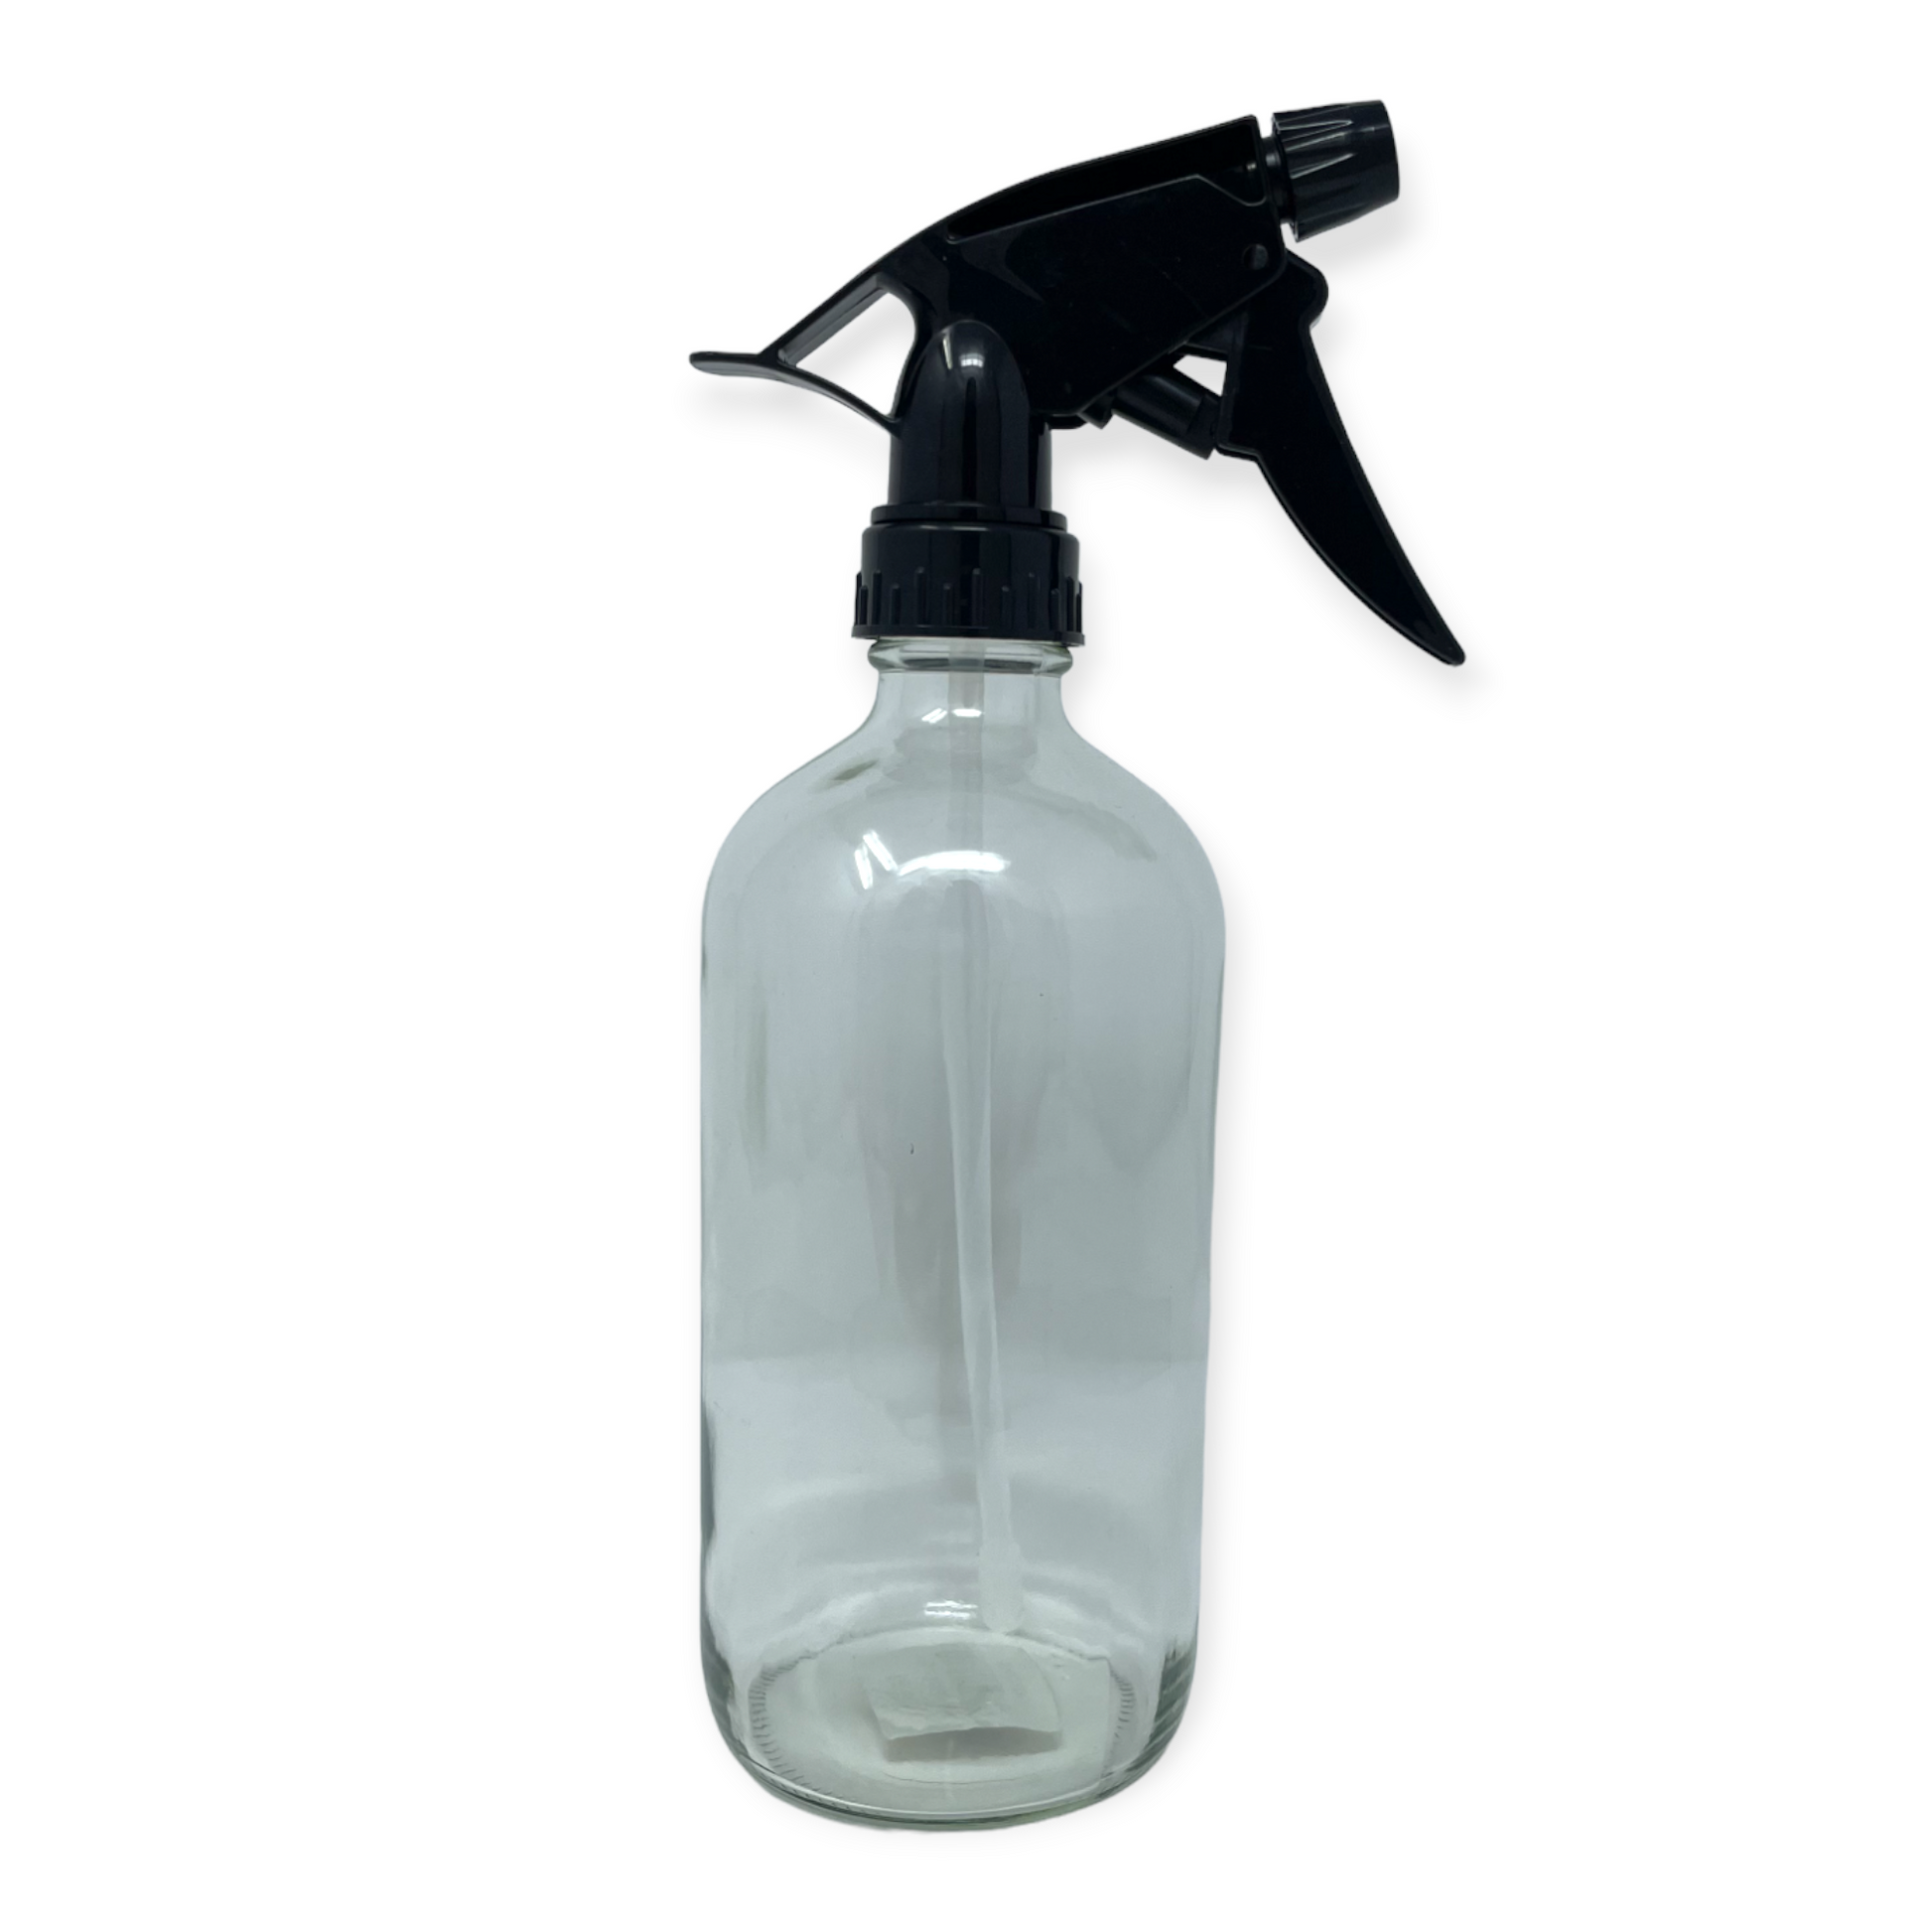 Glass Bottles With Lids 3 Clear 24 Oz Empty Bottles Refillable Jars Oils  Clean